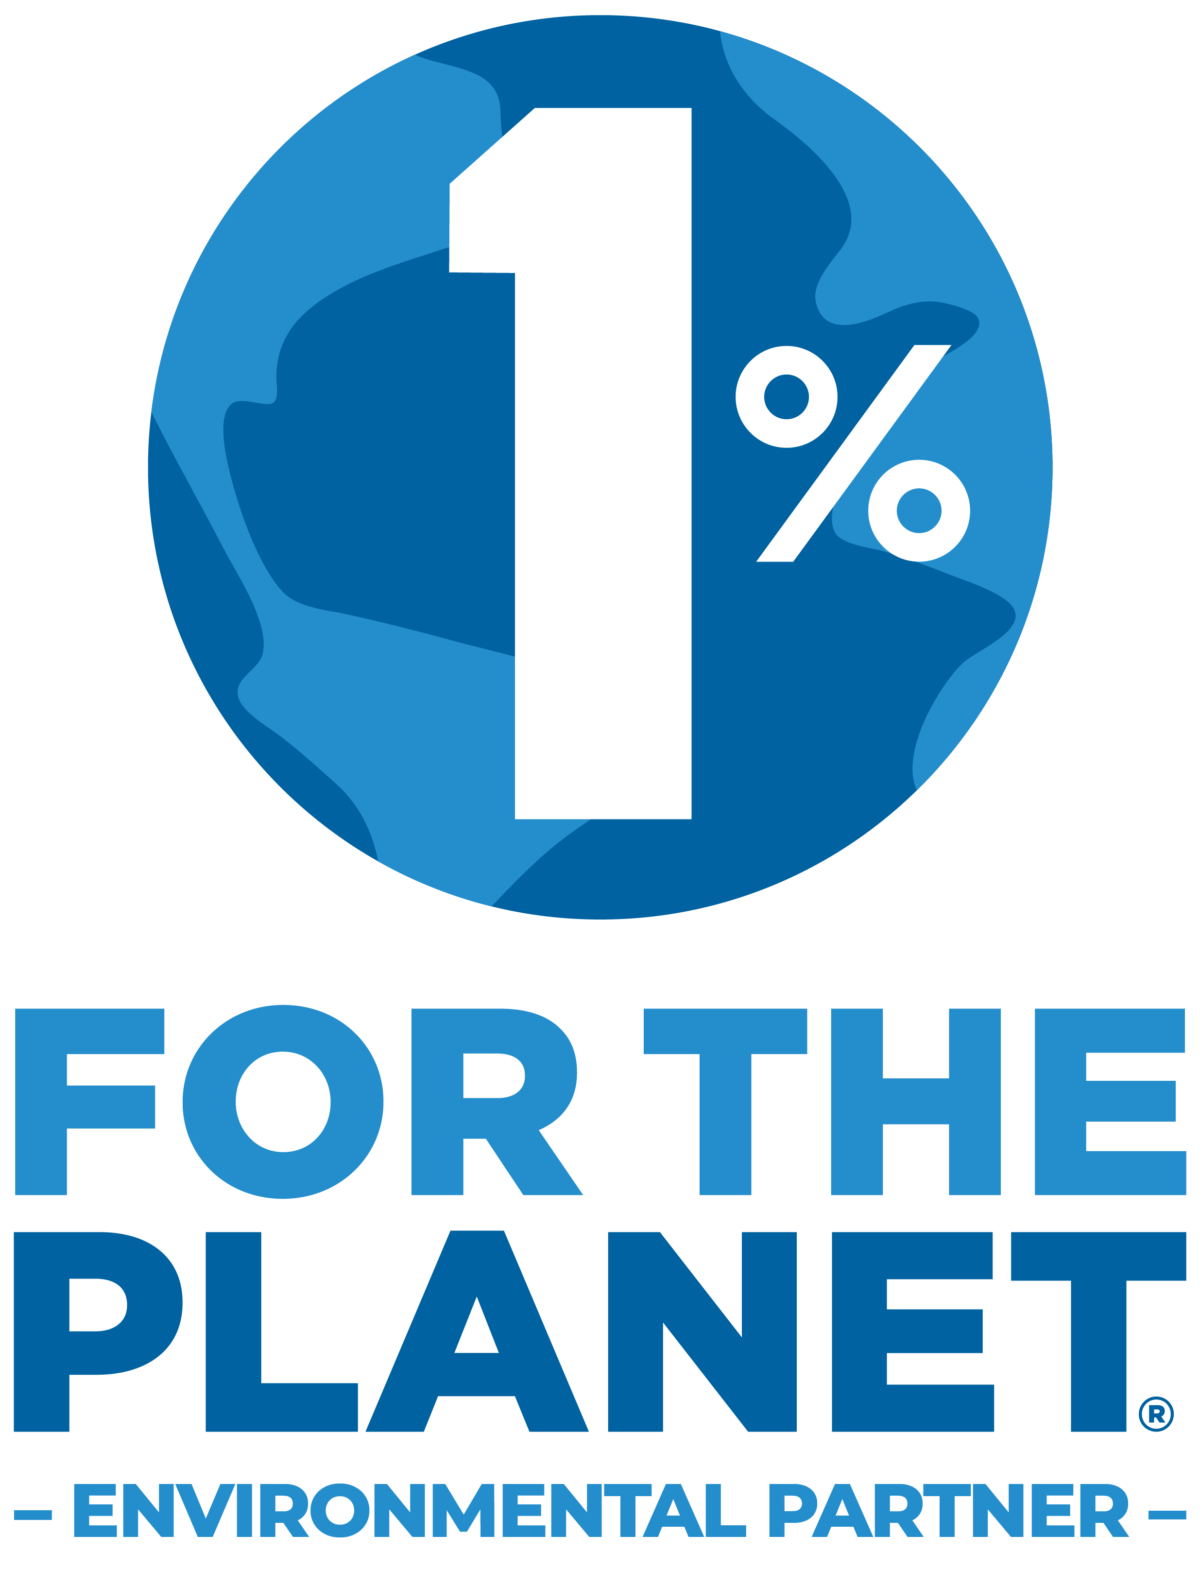 Image 1% for the planet environmental partner